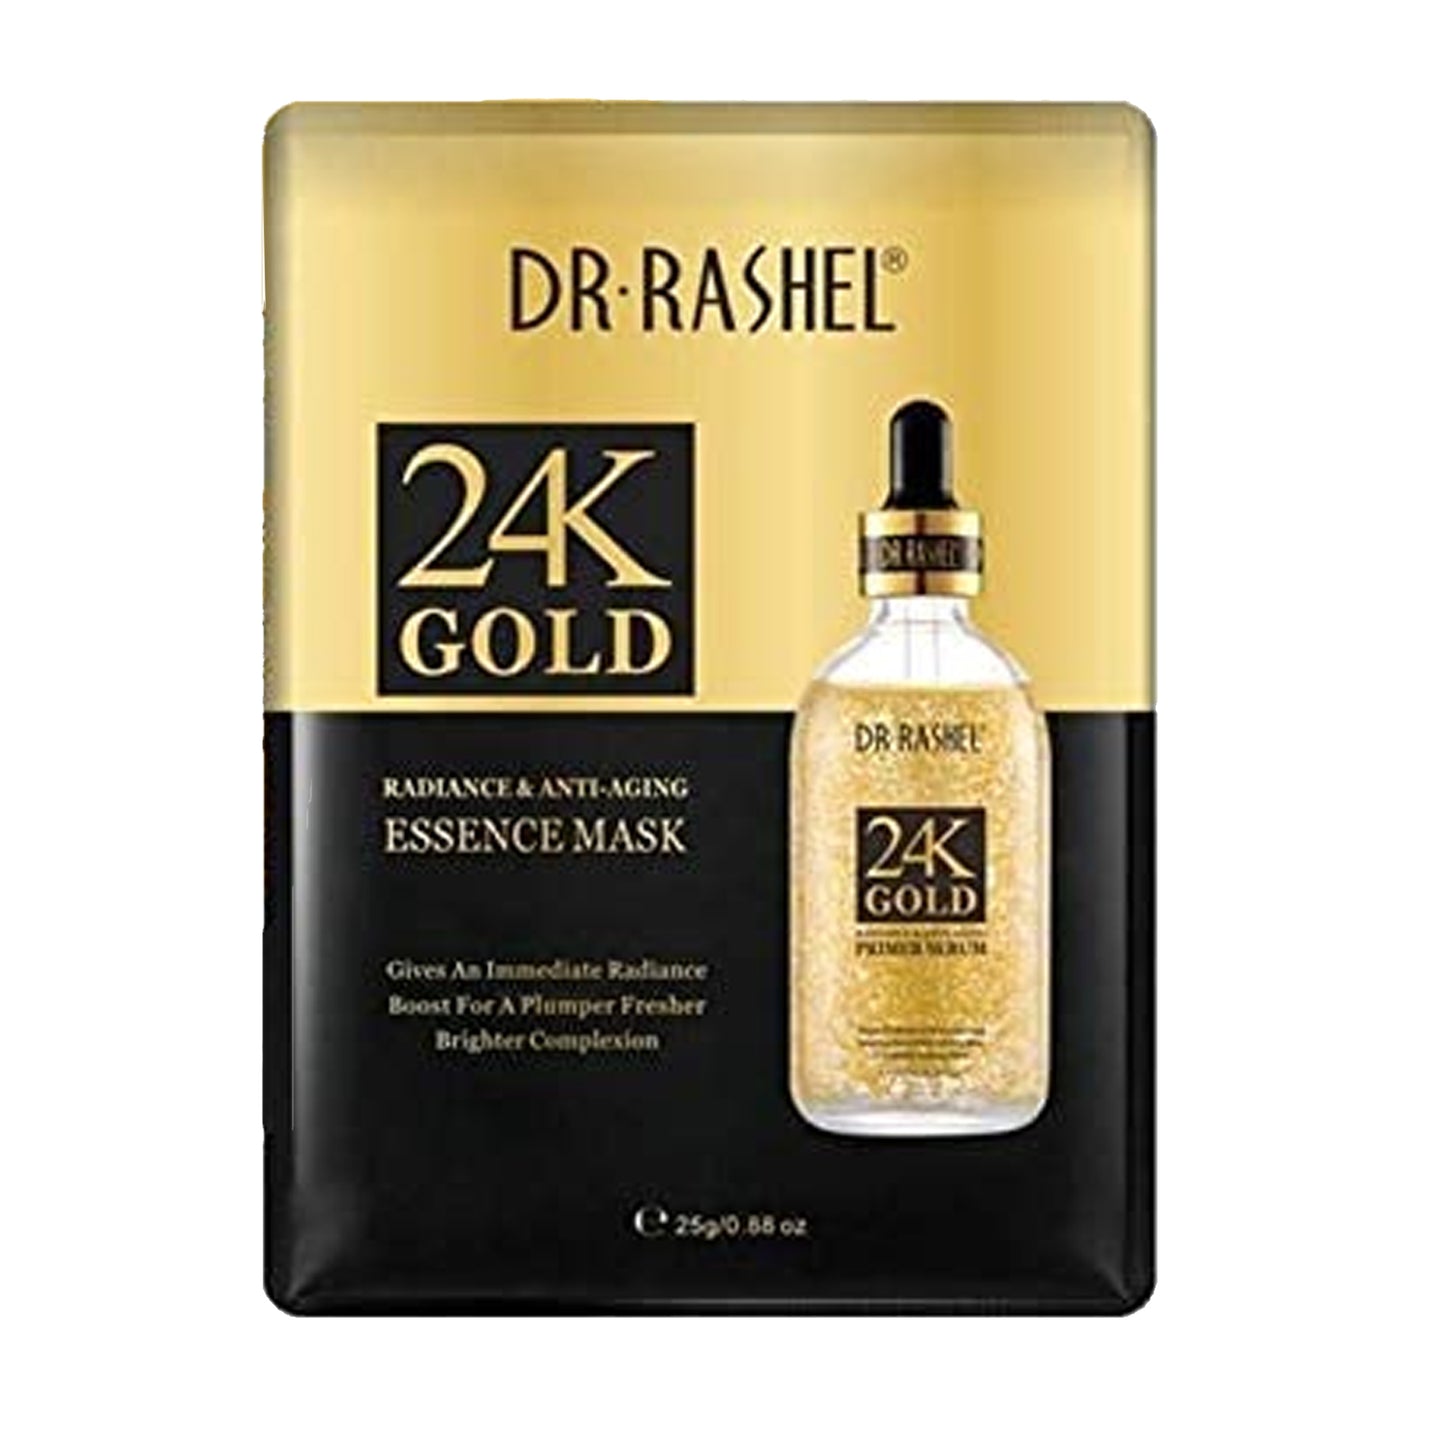 DR. RASHEL - 24K GOLD RADIANCE & ANTI-AGEING ESSENCE MASK